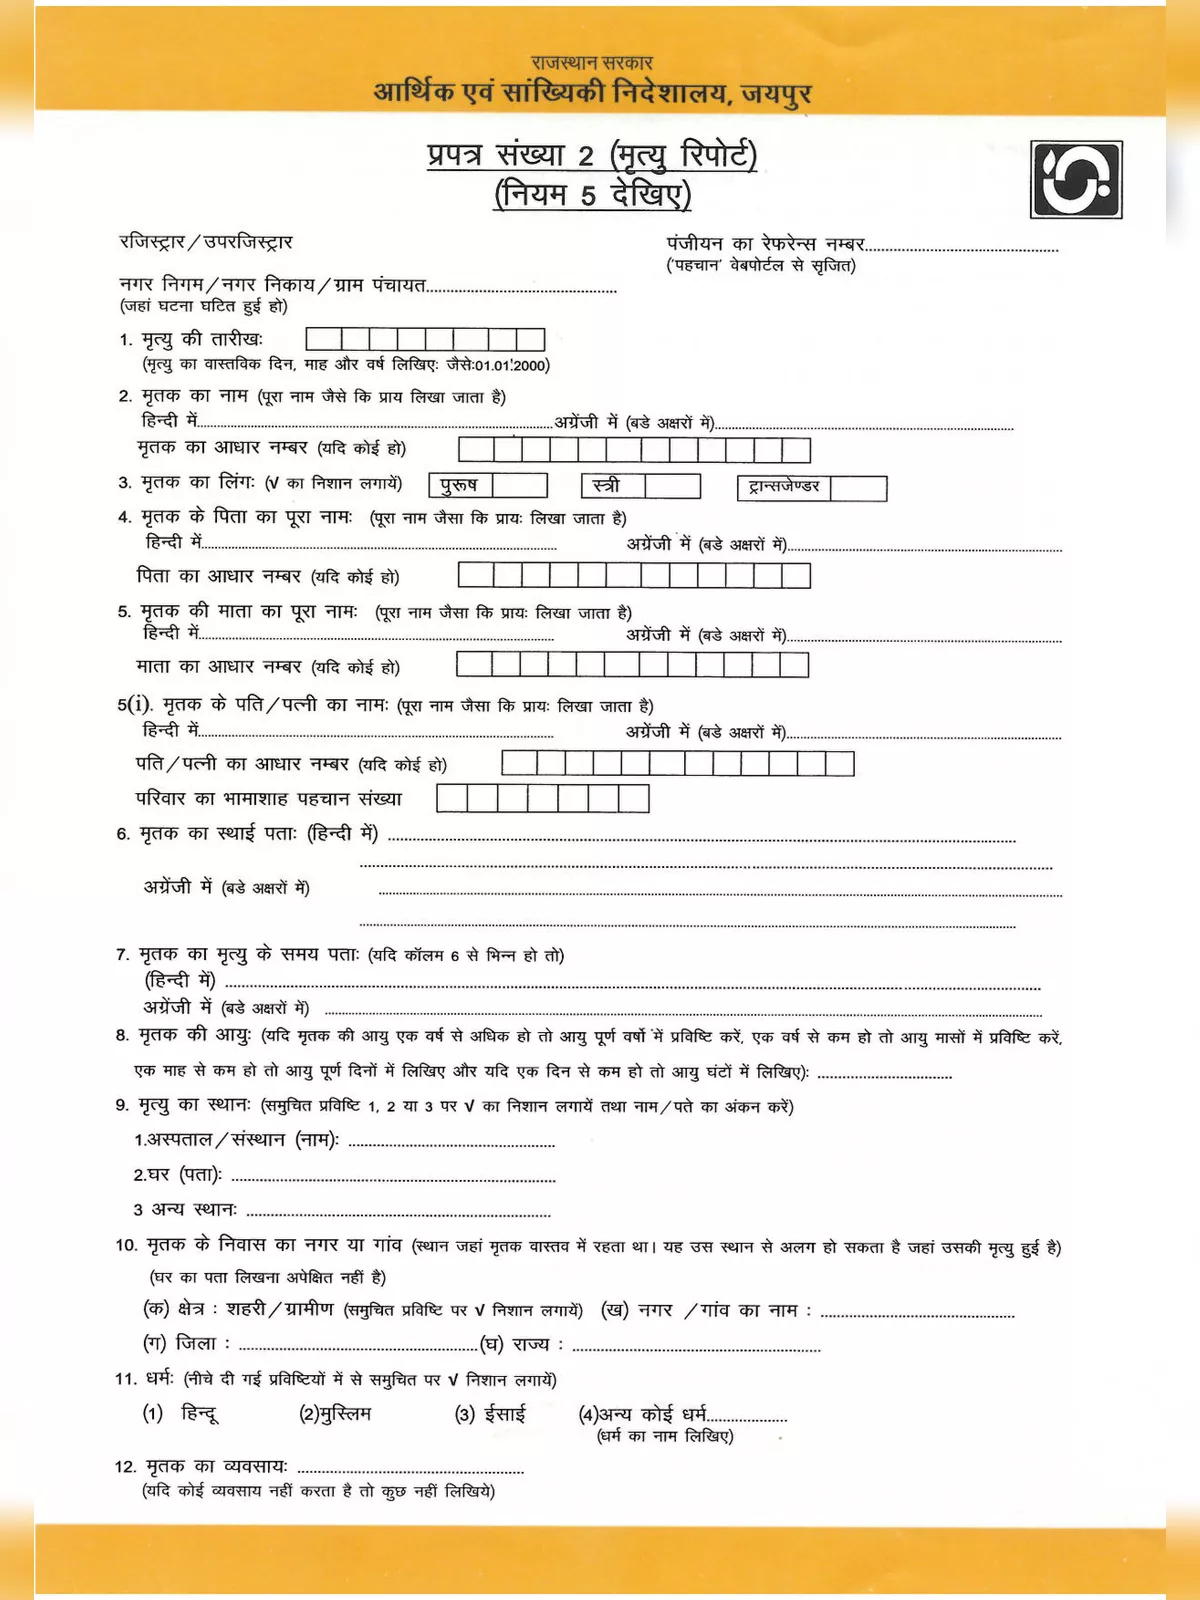 Rajasthan Death Certificate Form – राजस्थान मृत्यु प्रमाण पत्र आवेदन फॉर्म